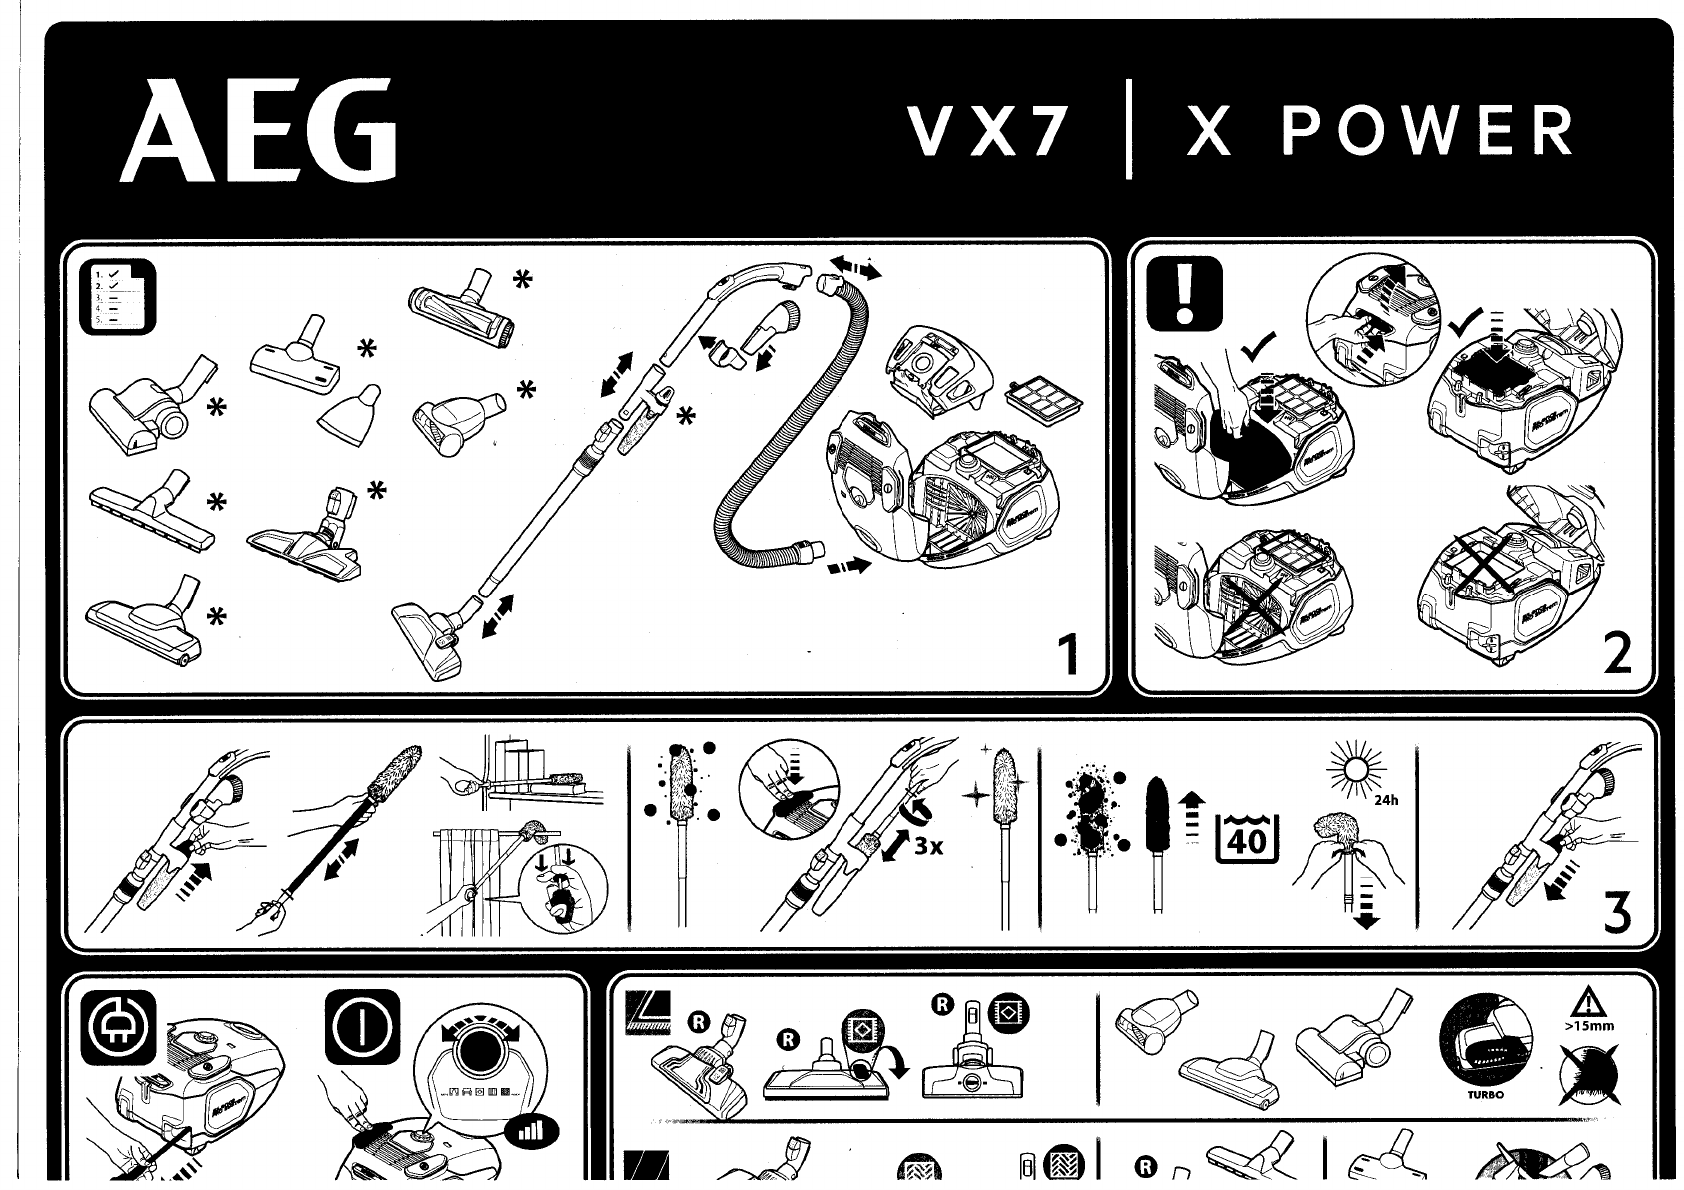 Manual AEG VX7-1 (page 1 of 2) (English, German, Dutch, Italian, Spanish)